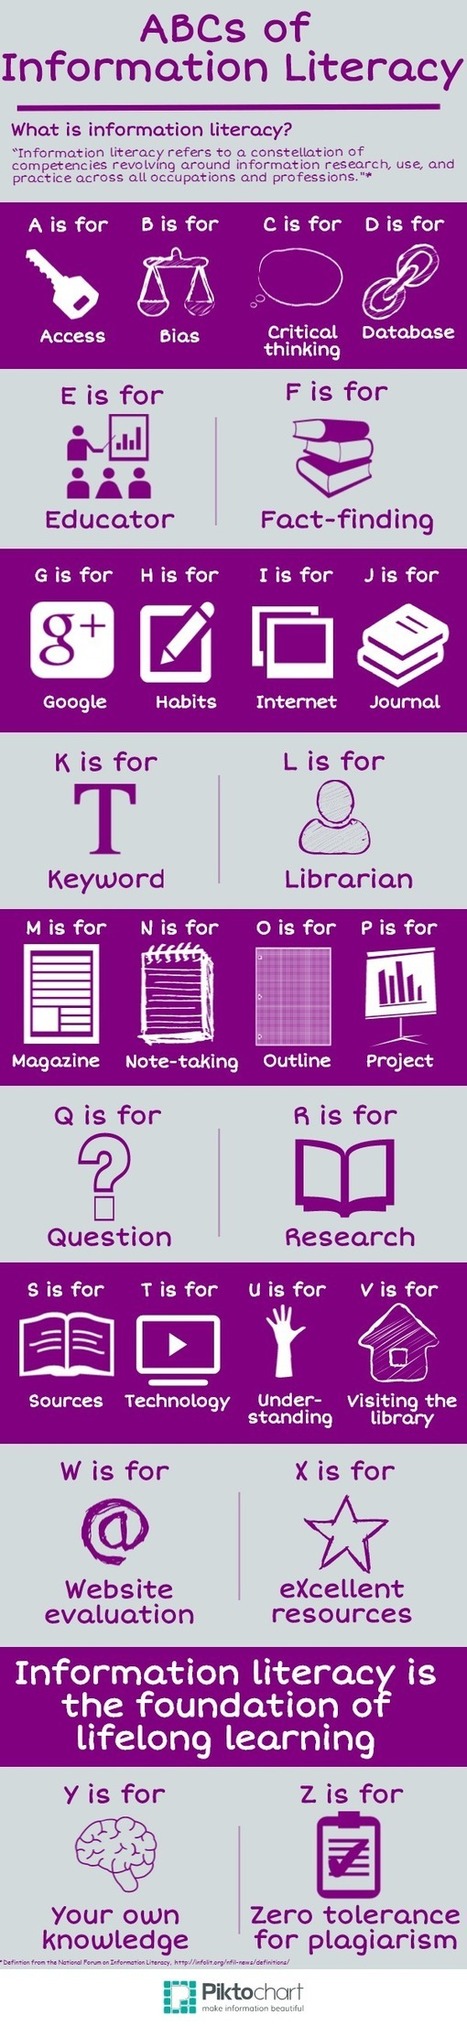 ABC Information Literacy (infographic) | EasyBib | Information and digital literacy in education via the digital path | Scoop.it